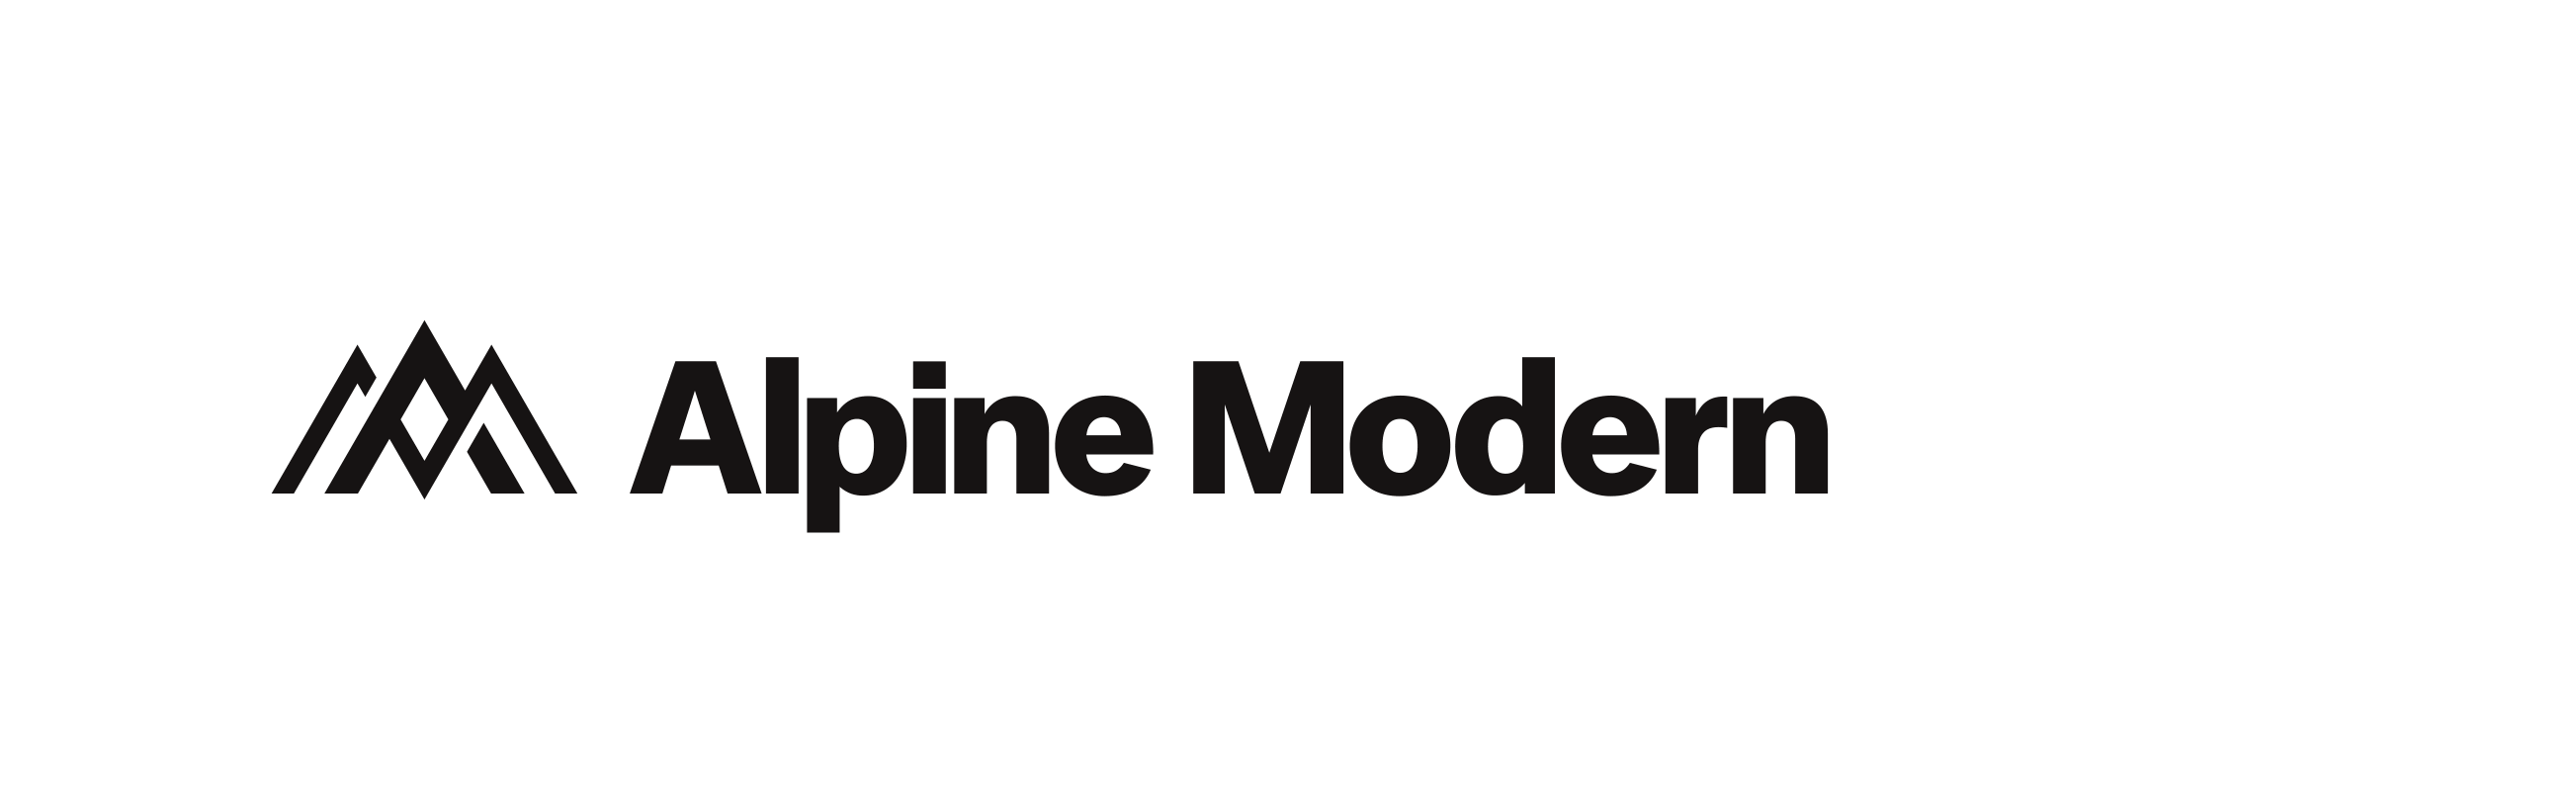 Alpine Modern Brand 1